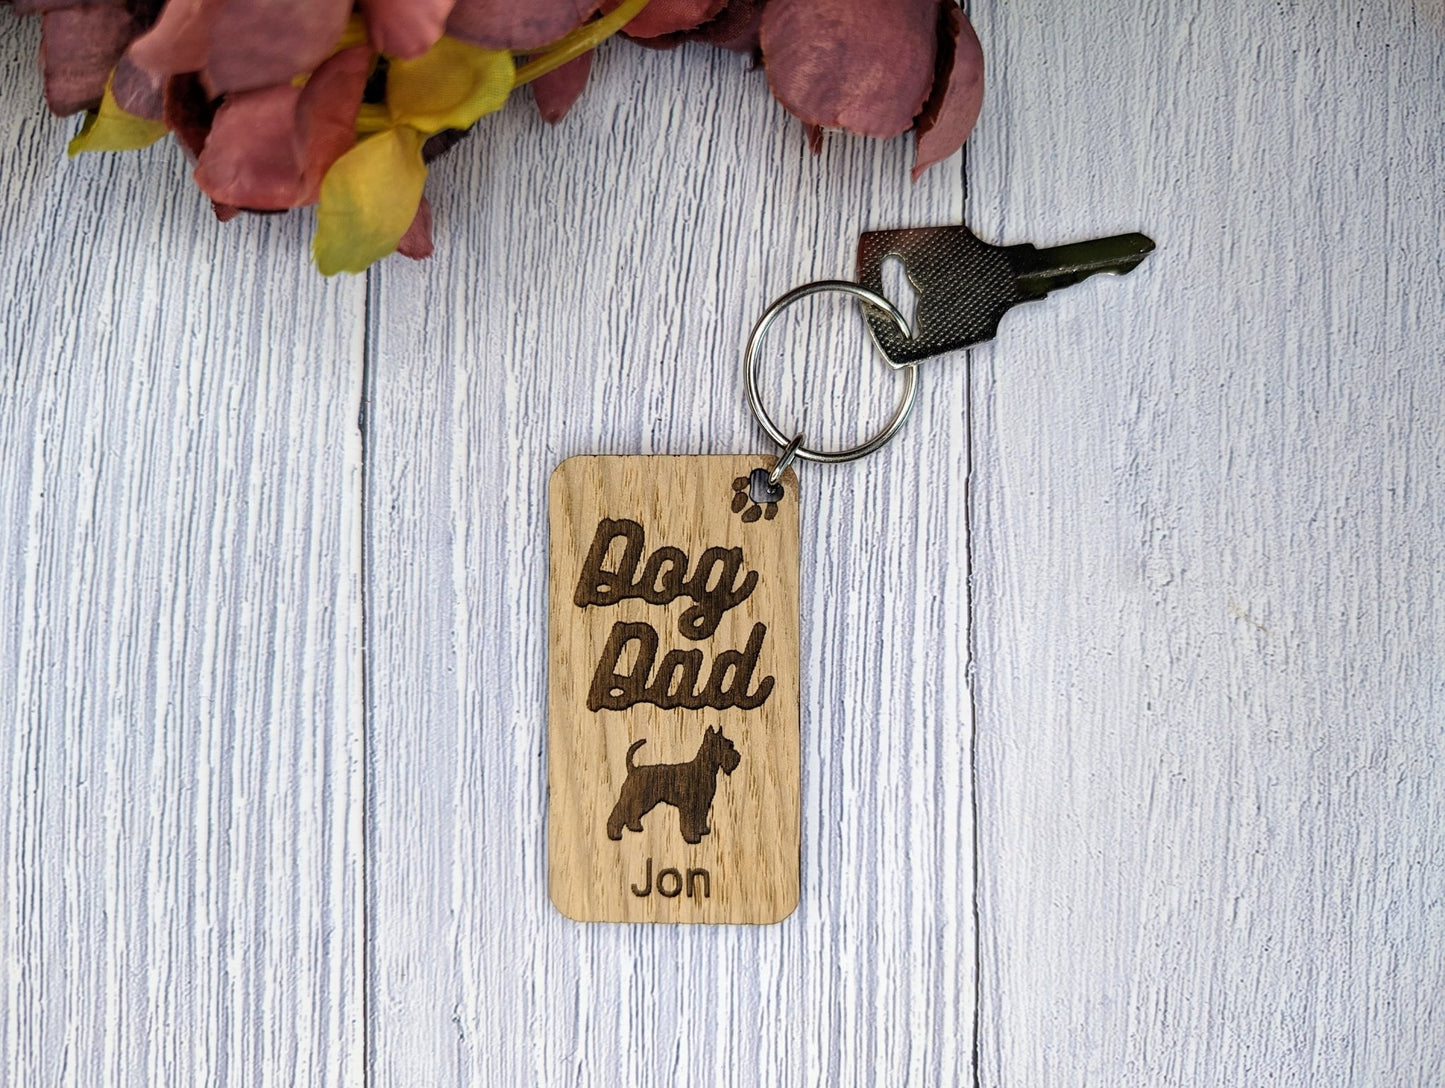 Personalised Schnauzer Dog Dad Wooden Keyring | Oak Dog Keychain | Gift For Schnauzer Parent | Doggy Key Tag Gift - CherryGroveCraft